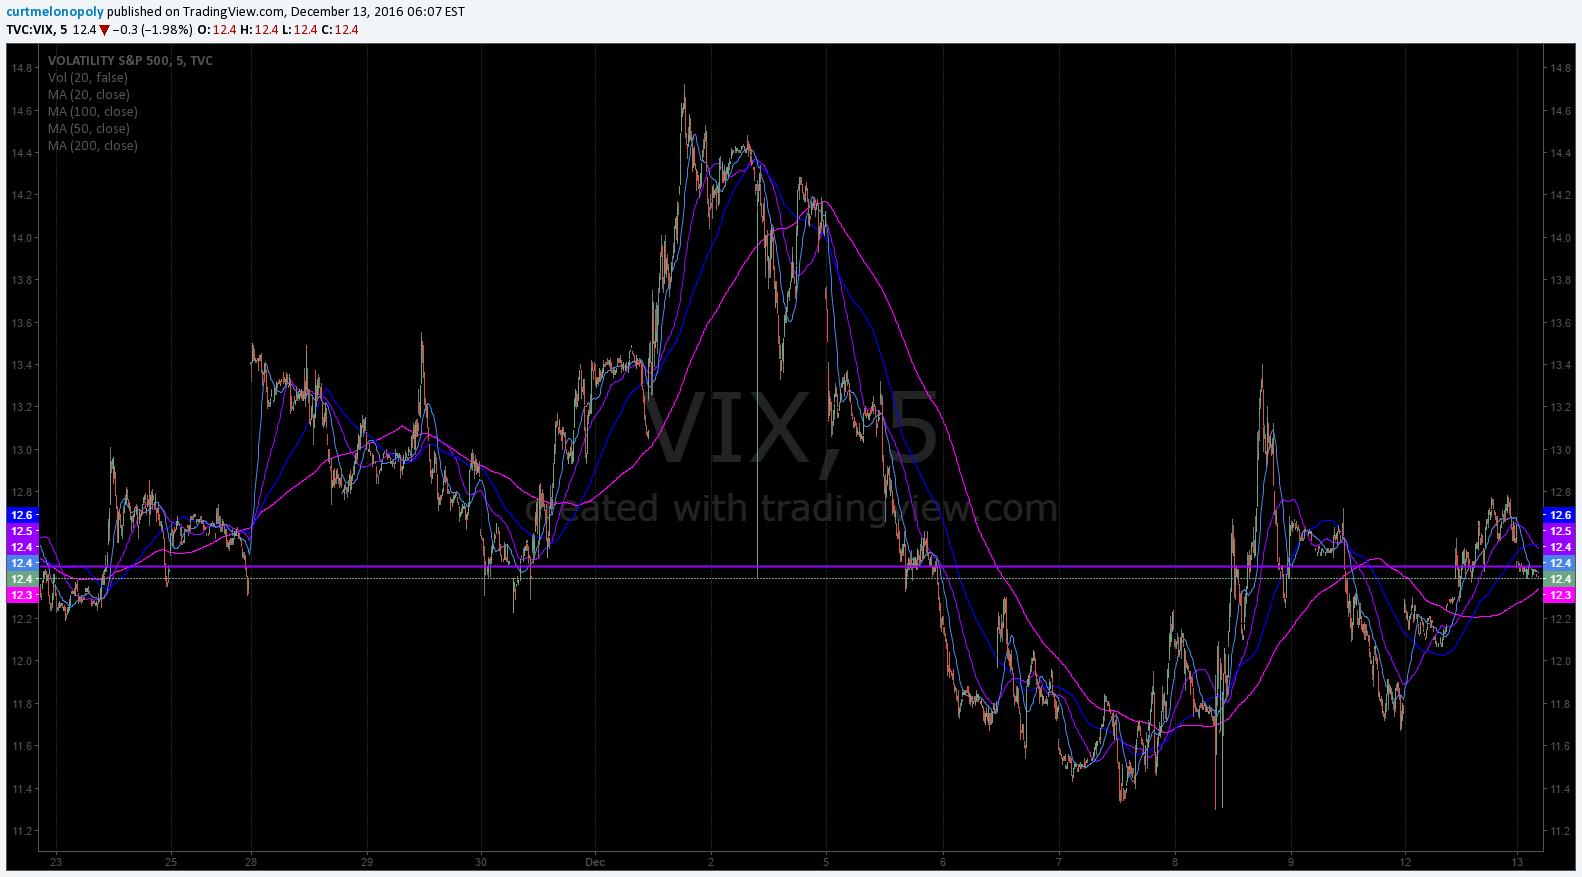 $VIX, Volatility Index, Chart